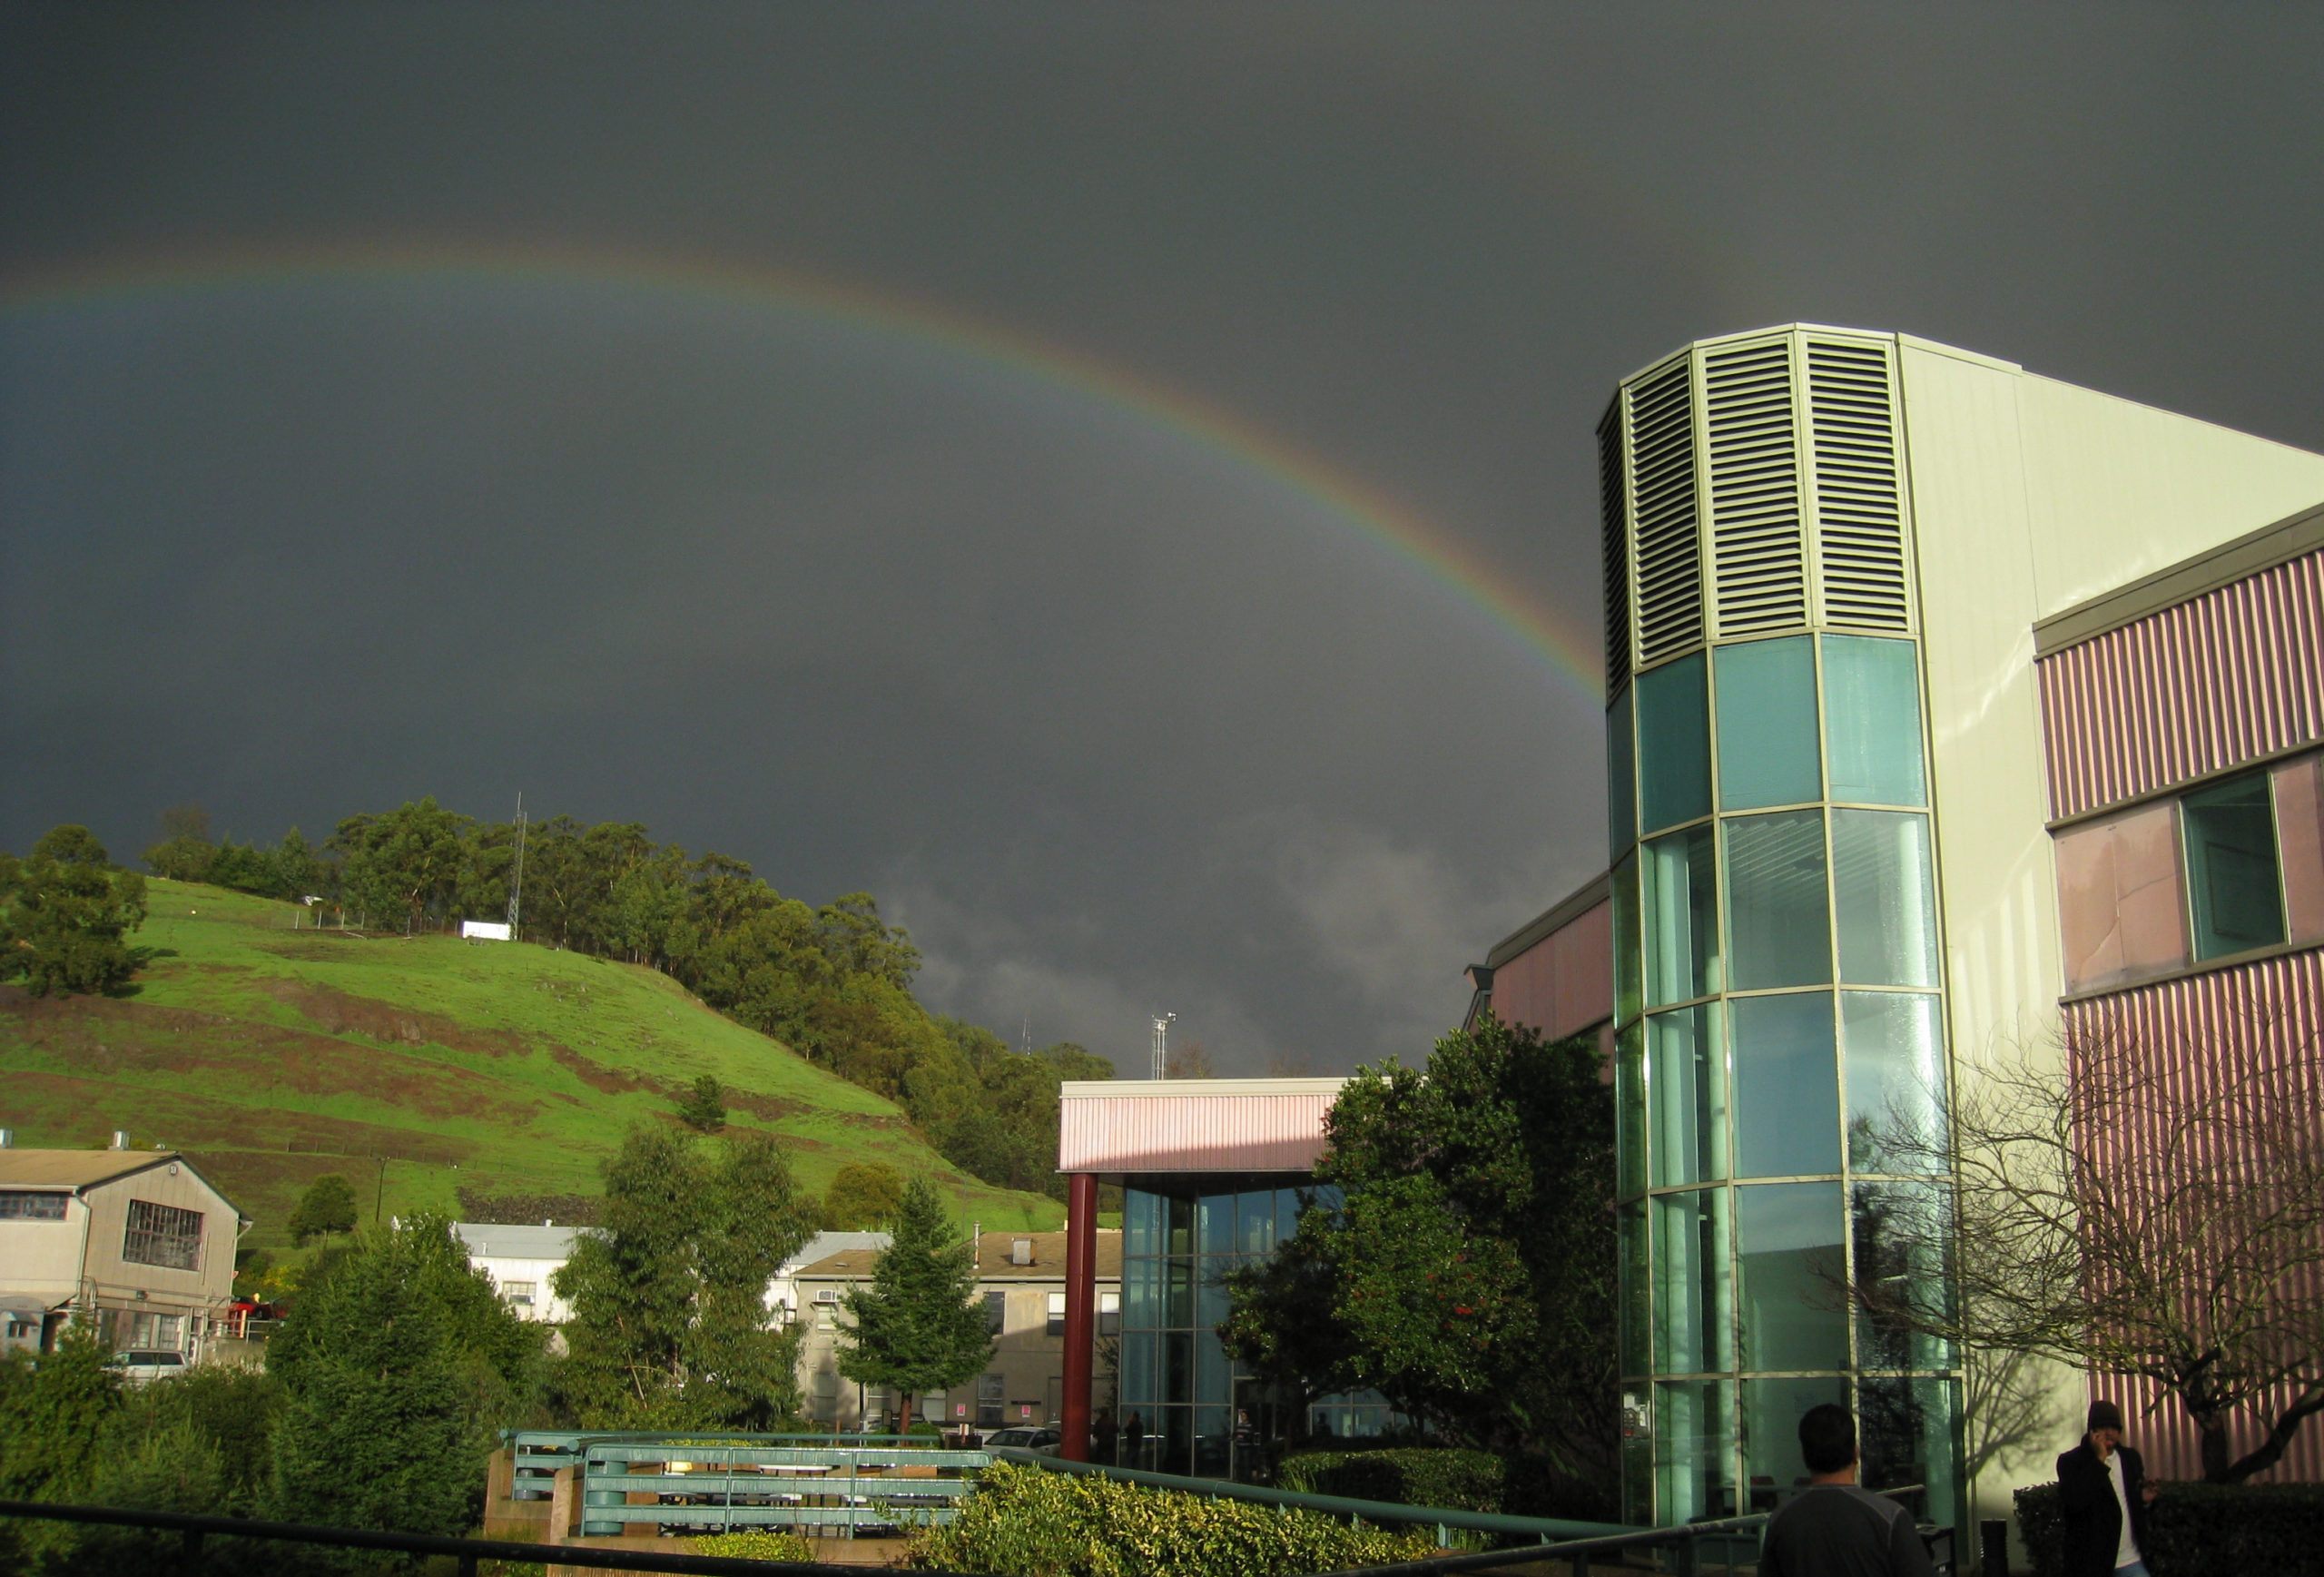 Rainbow against a dark grey sky ending at the ALS